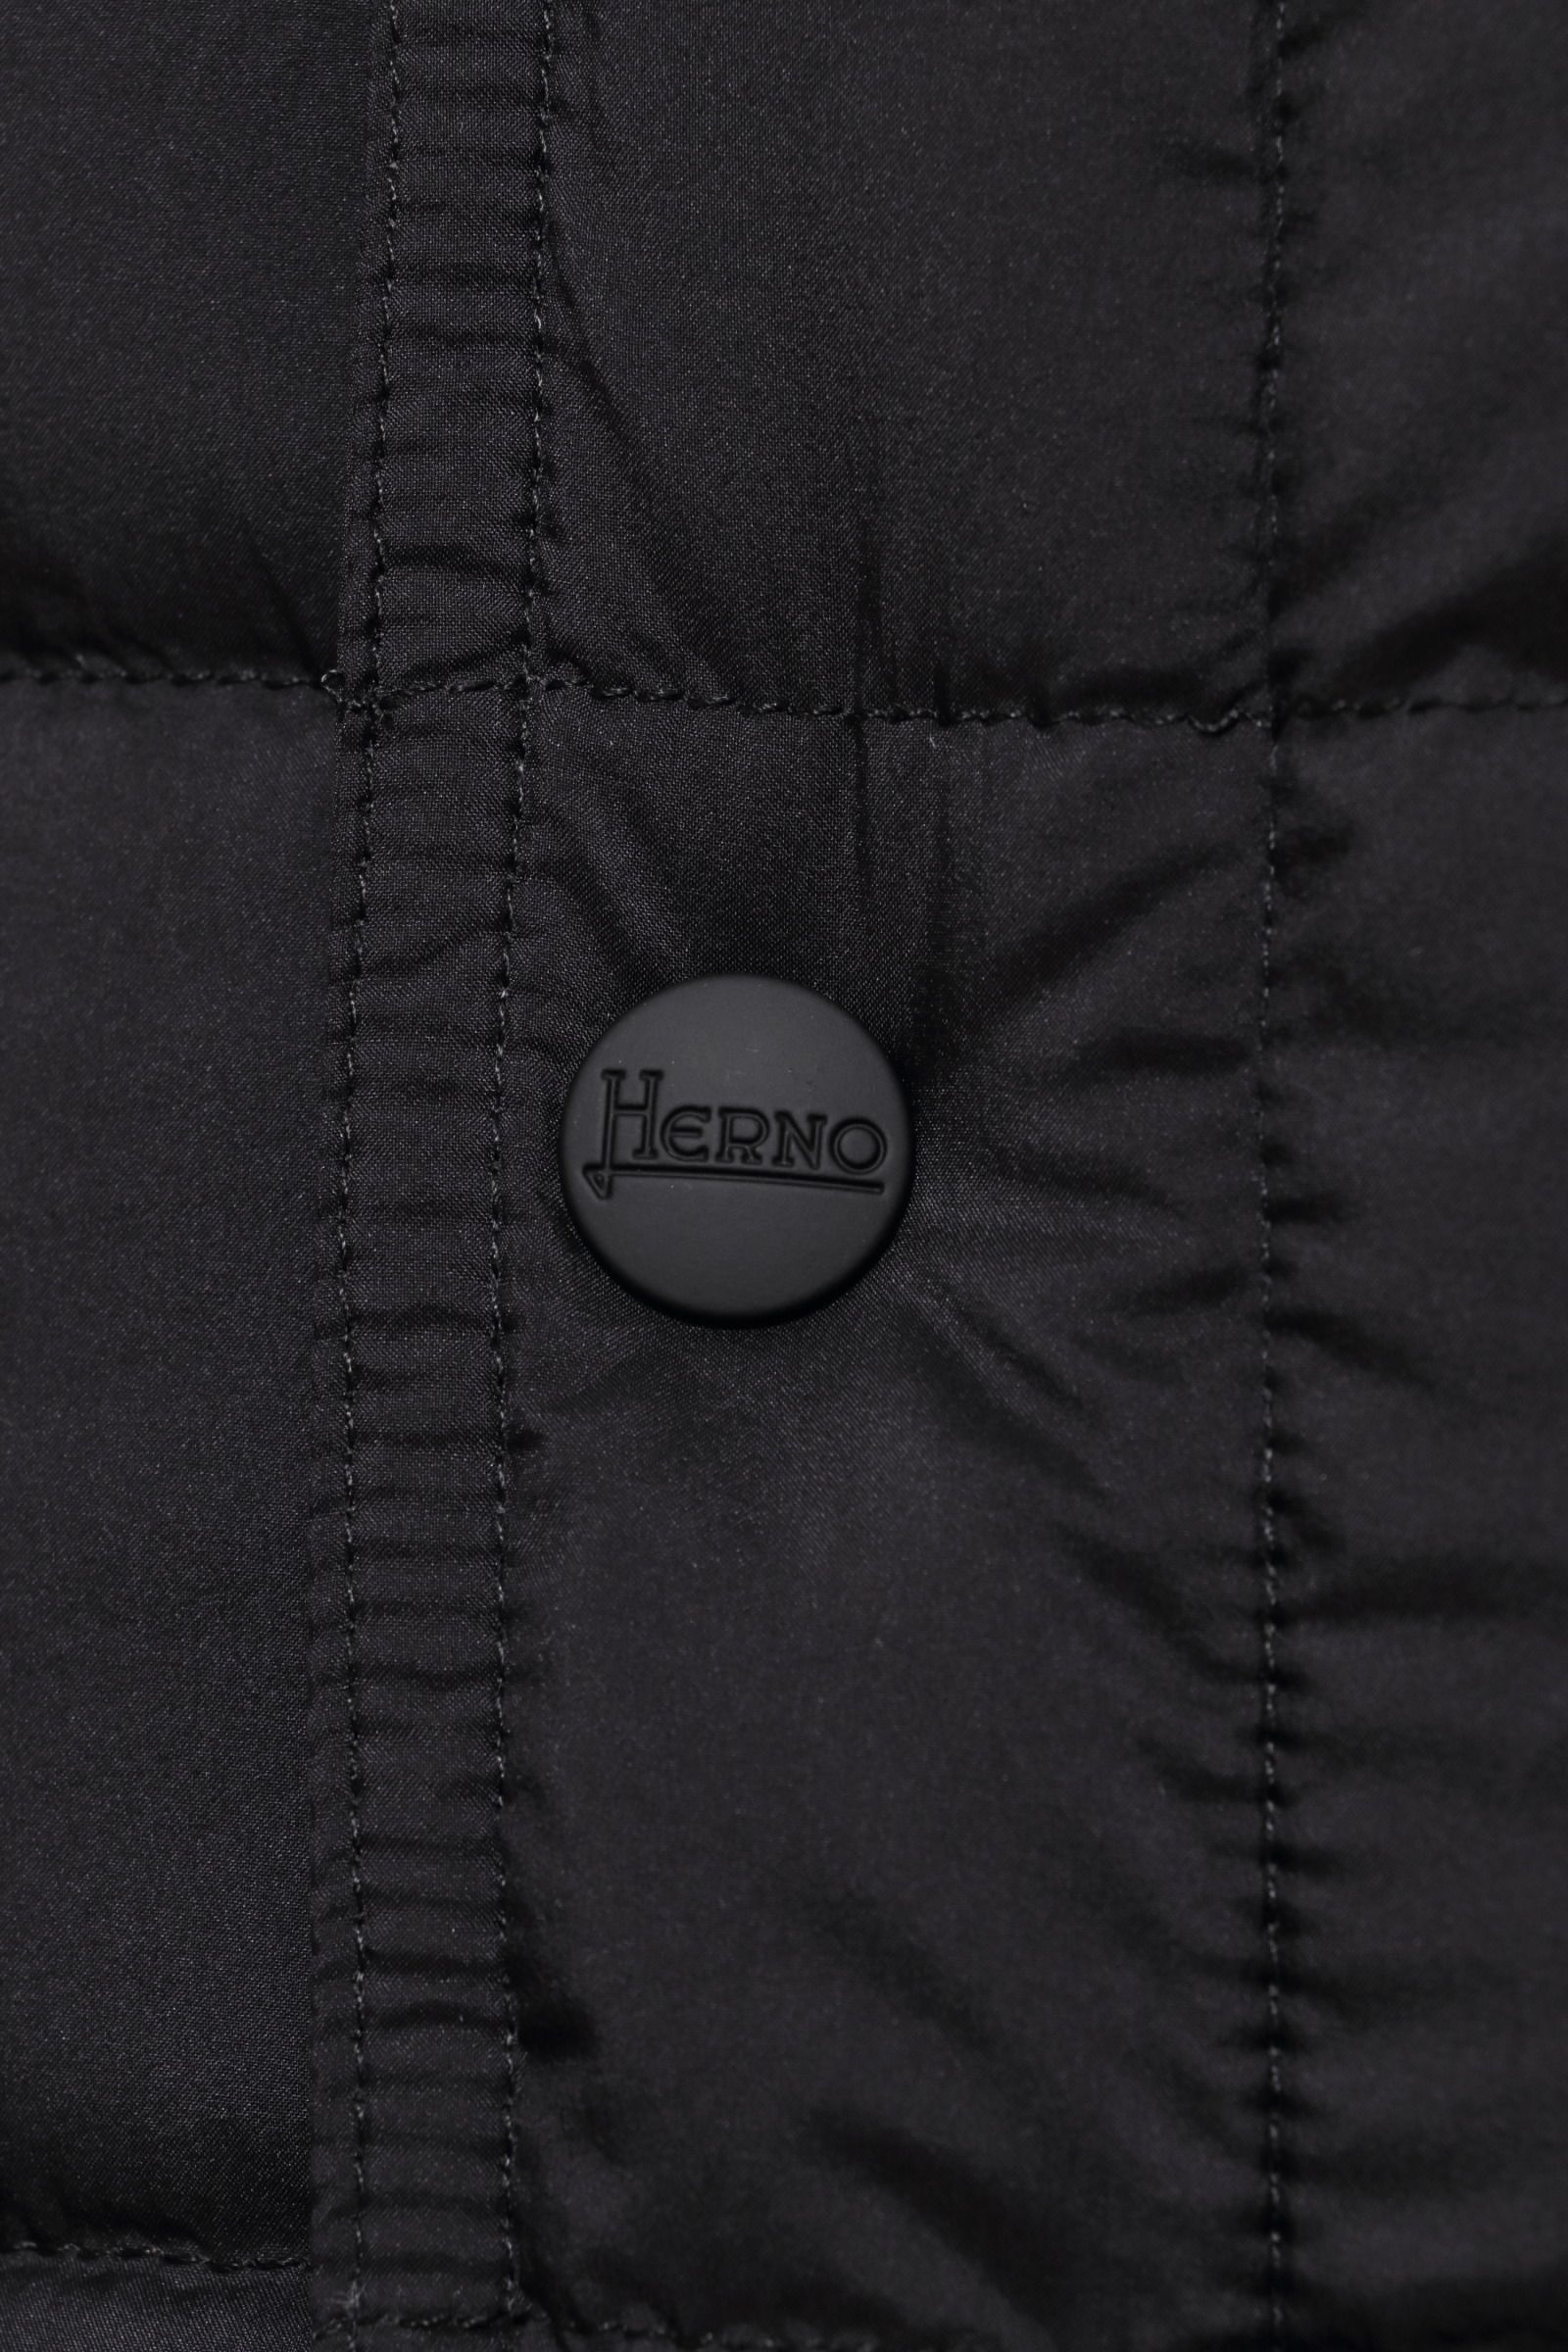 HERNO - PI011ULE ナイロン Gジャン型 ダウンジャケット / ブラック